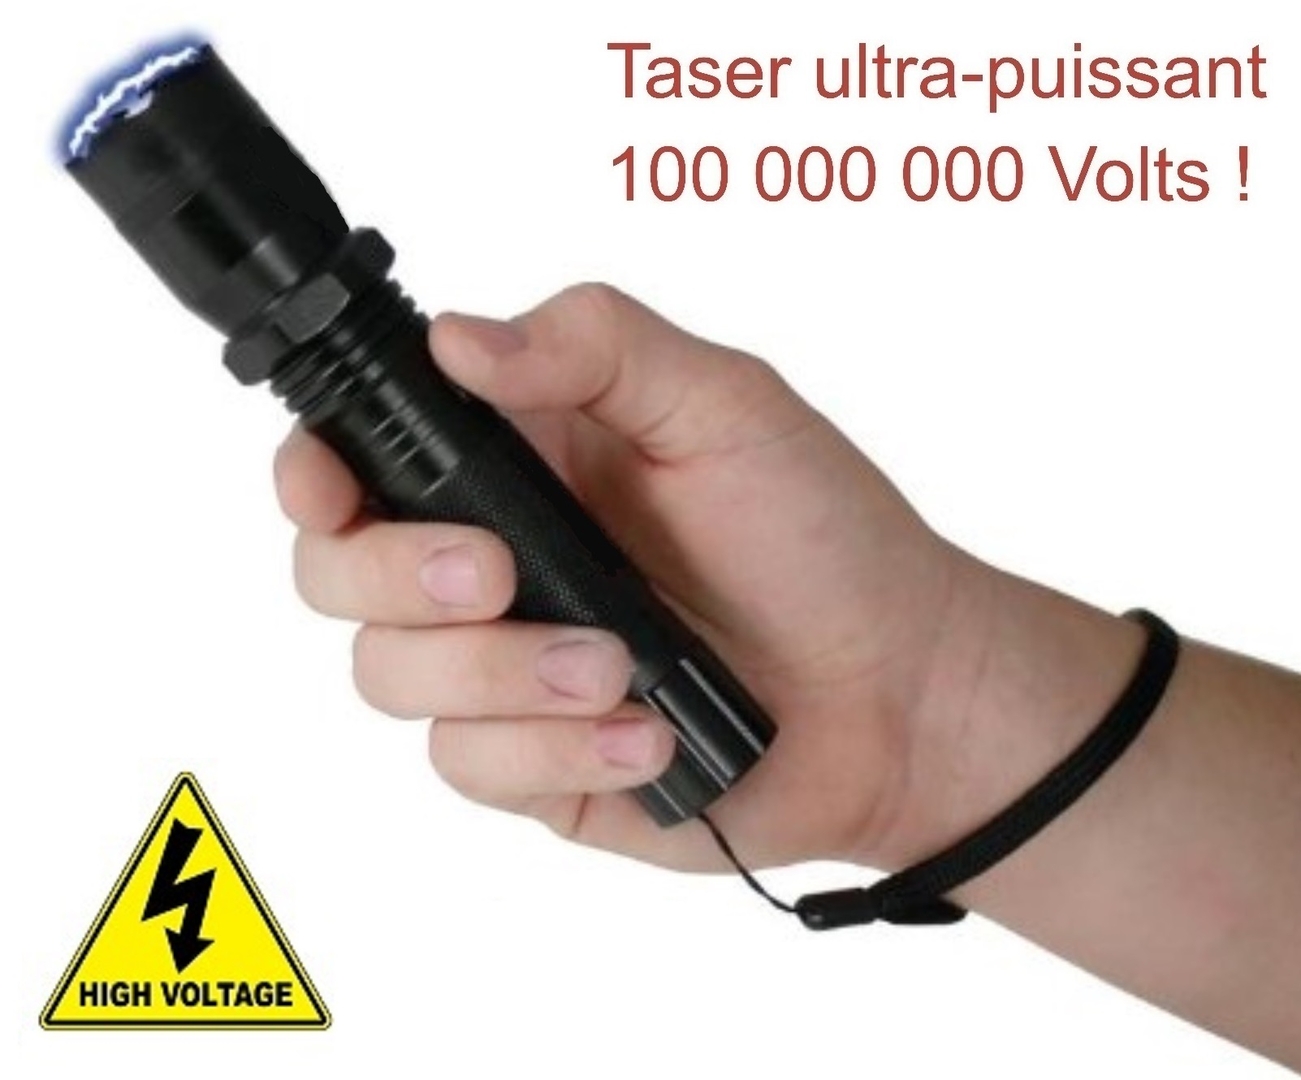 https://media.cdnws.com/_i/7819/m1440-12883/1562/86/taser-shocker-led-100-000-000-volts-tazer-noir.jpeg